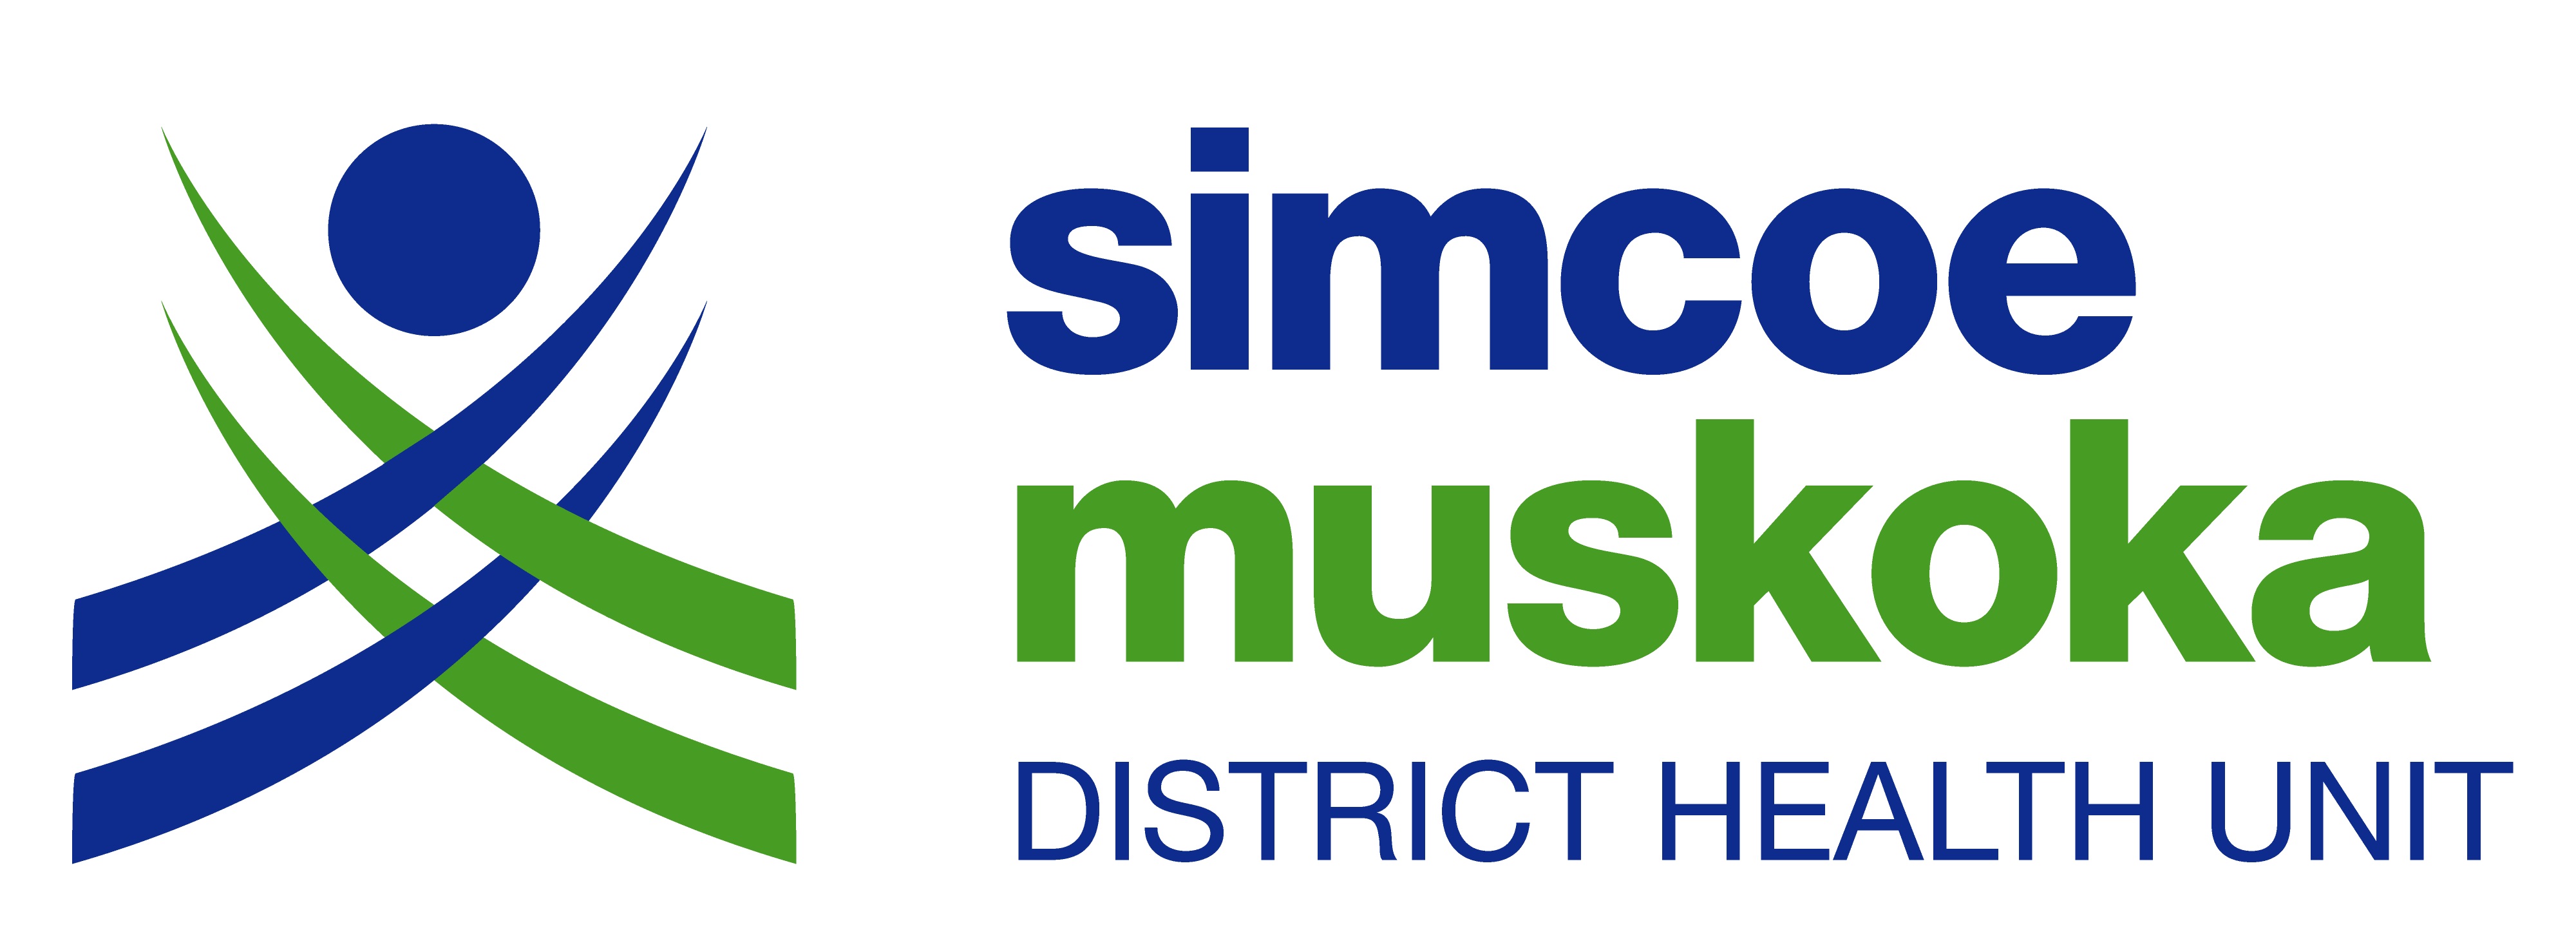 Simcoe Muskoka District Health Unit logo